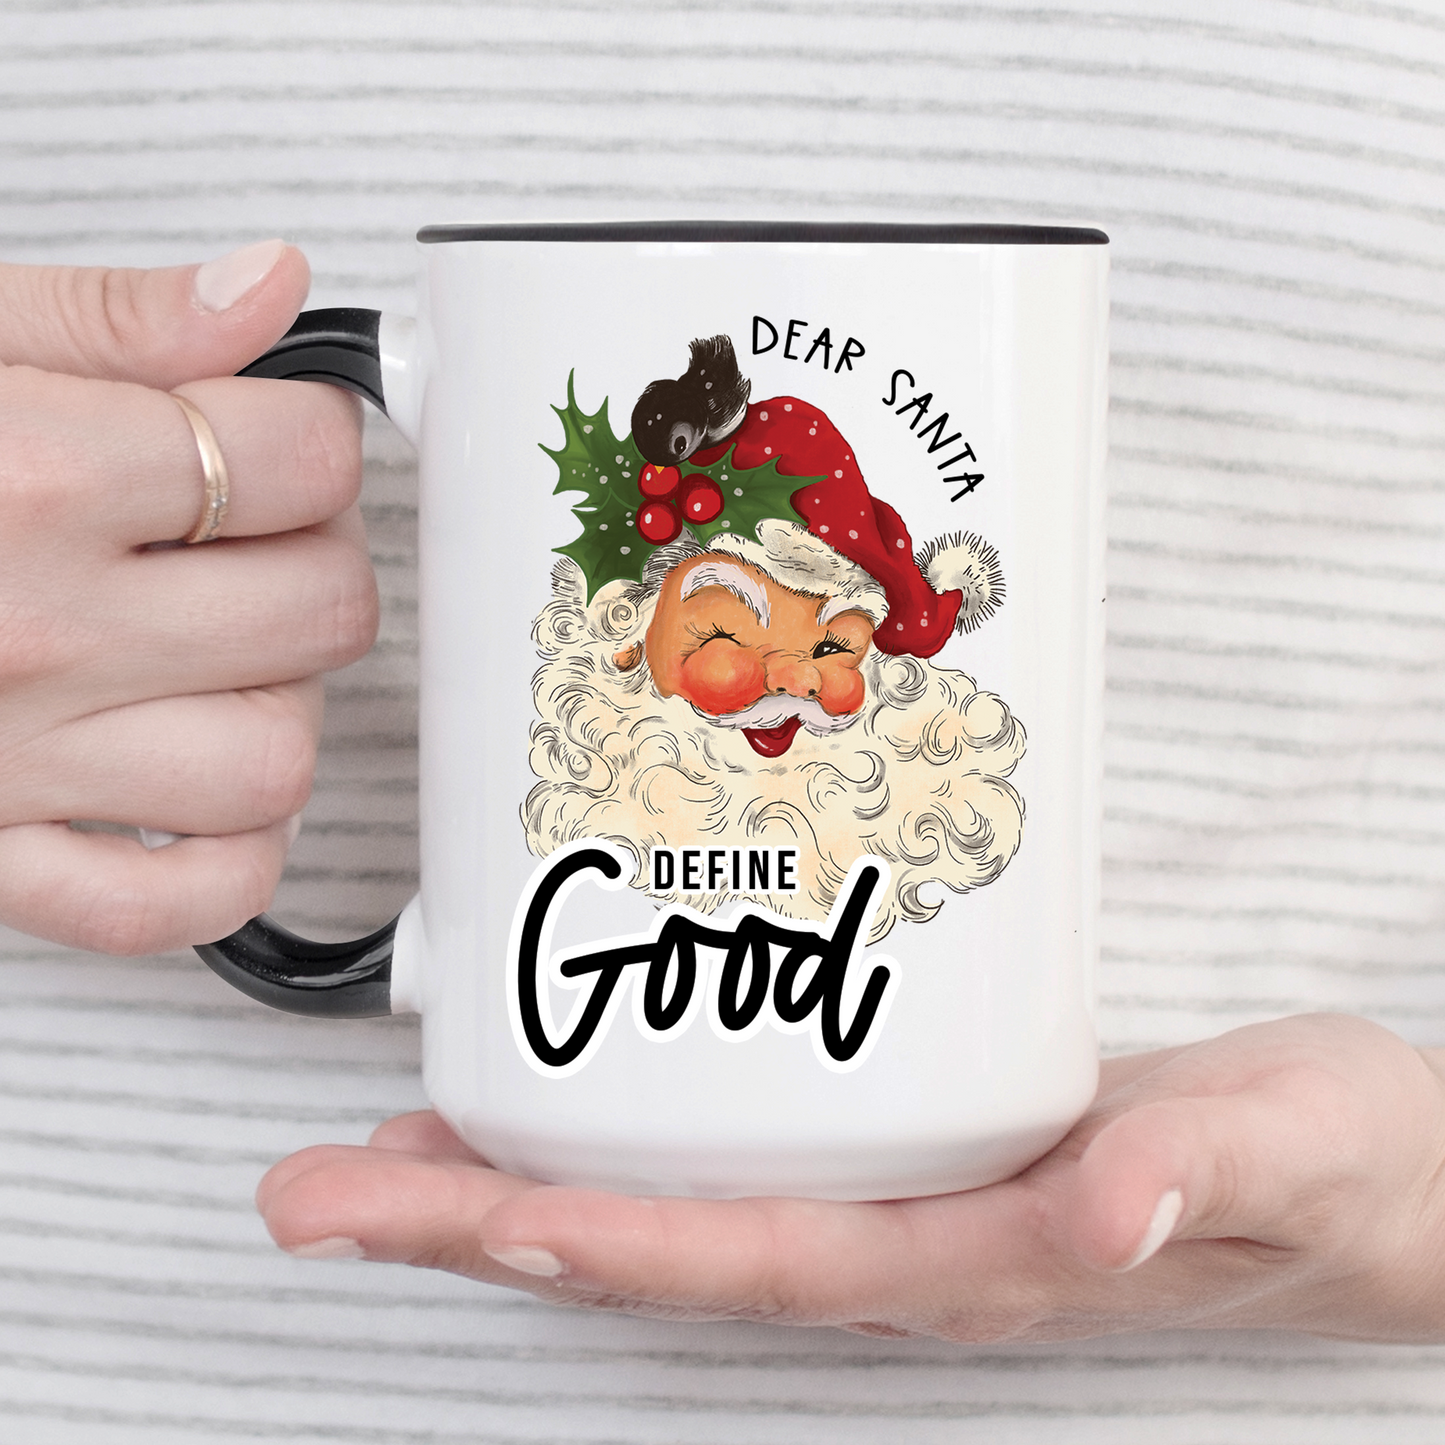 Dear Santa Define Good Mug